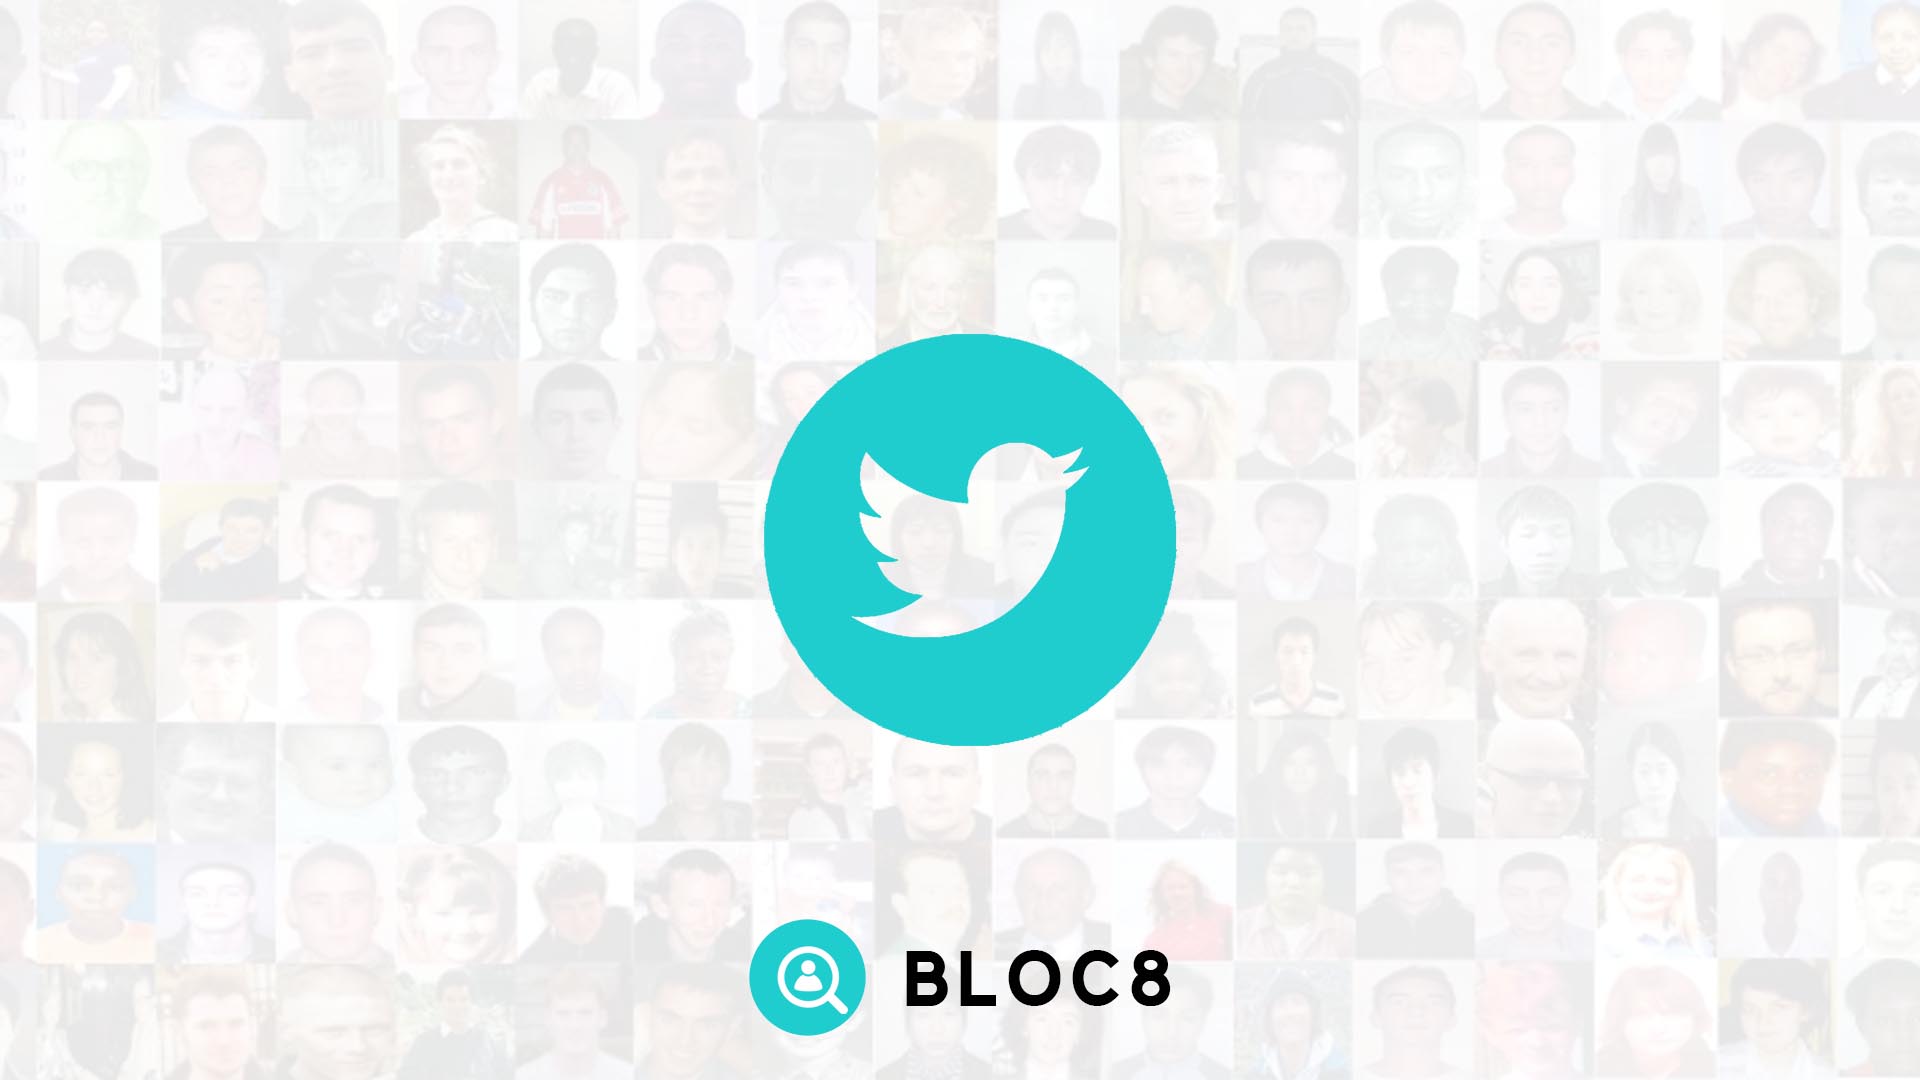 BLOC8 Twitter Feed